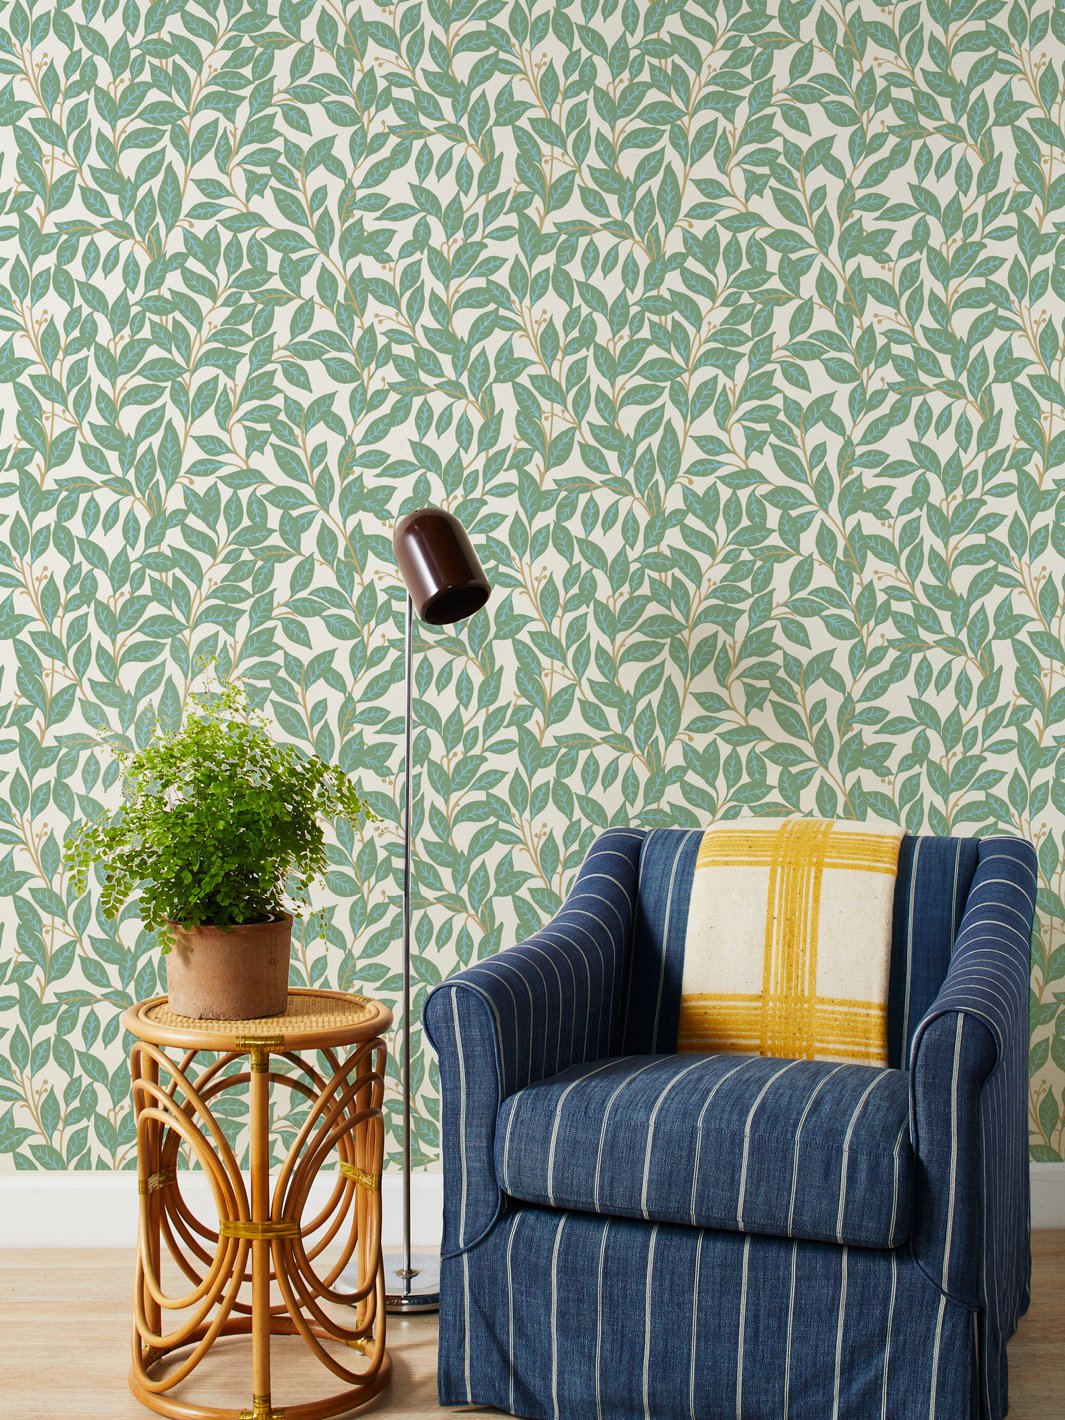 'Orchard Leaves' Grasscloth' Wallpaper by Wallshoppe - Green